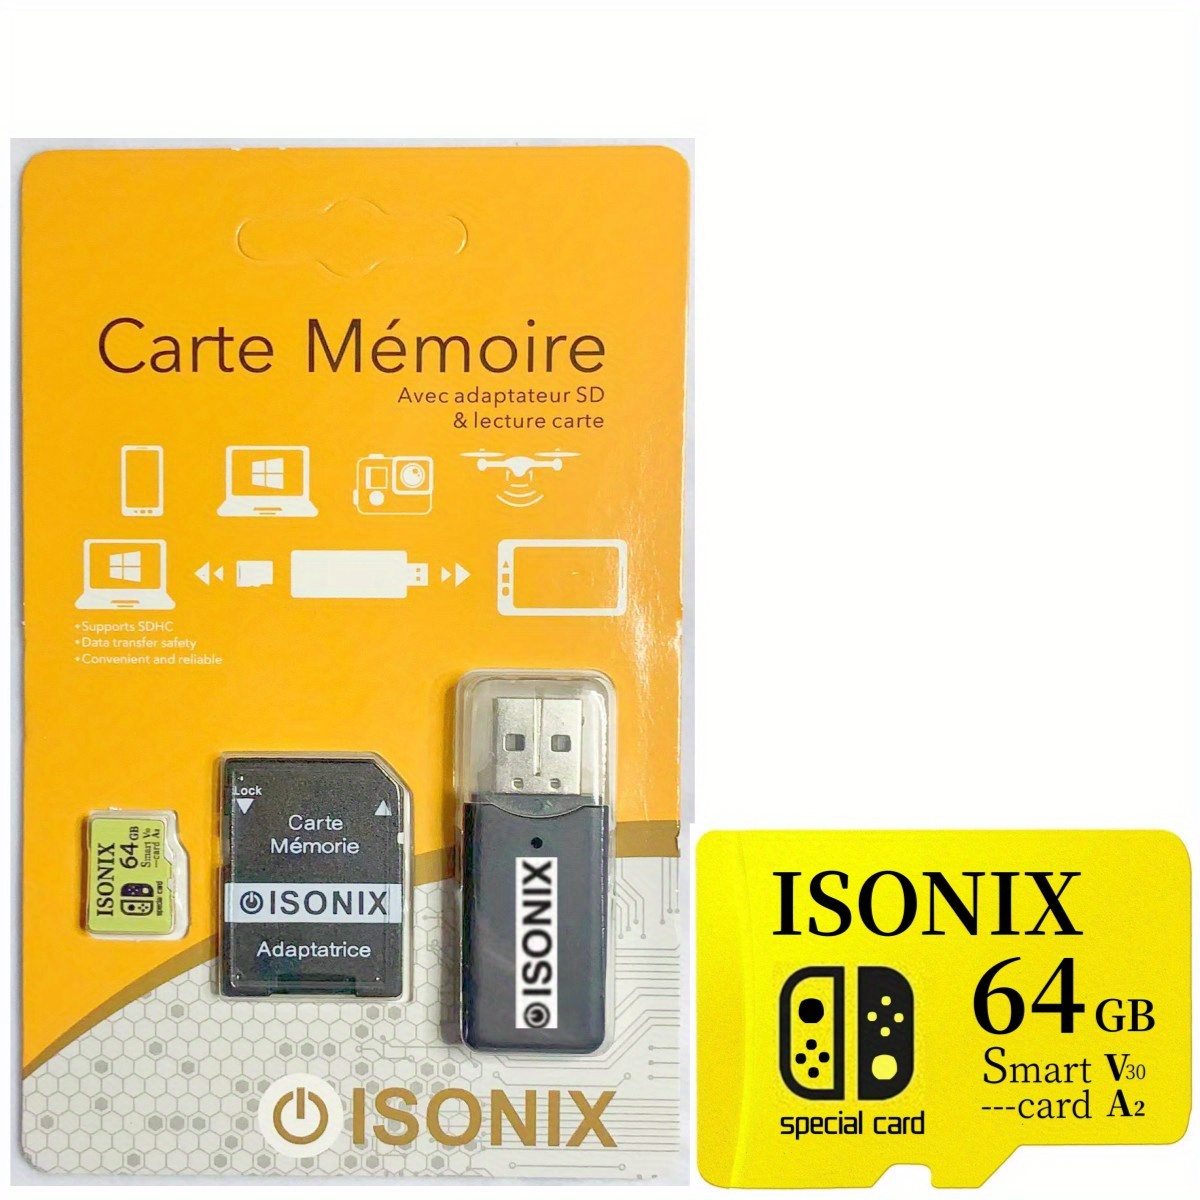 Carte Memoire SD 512 GB